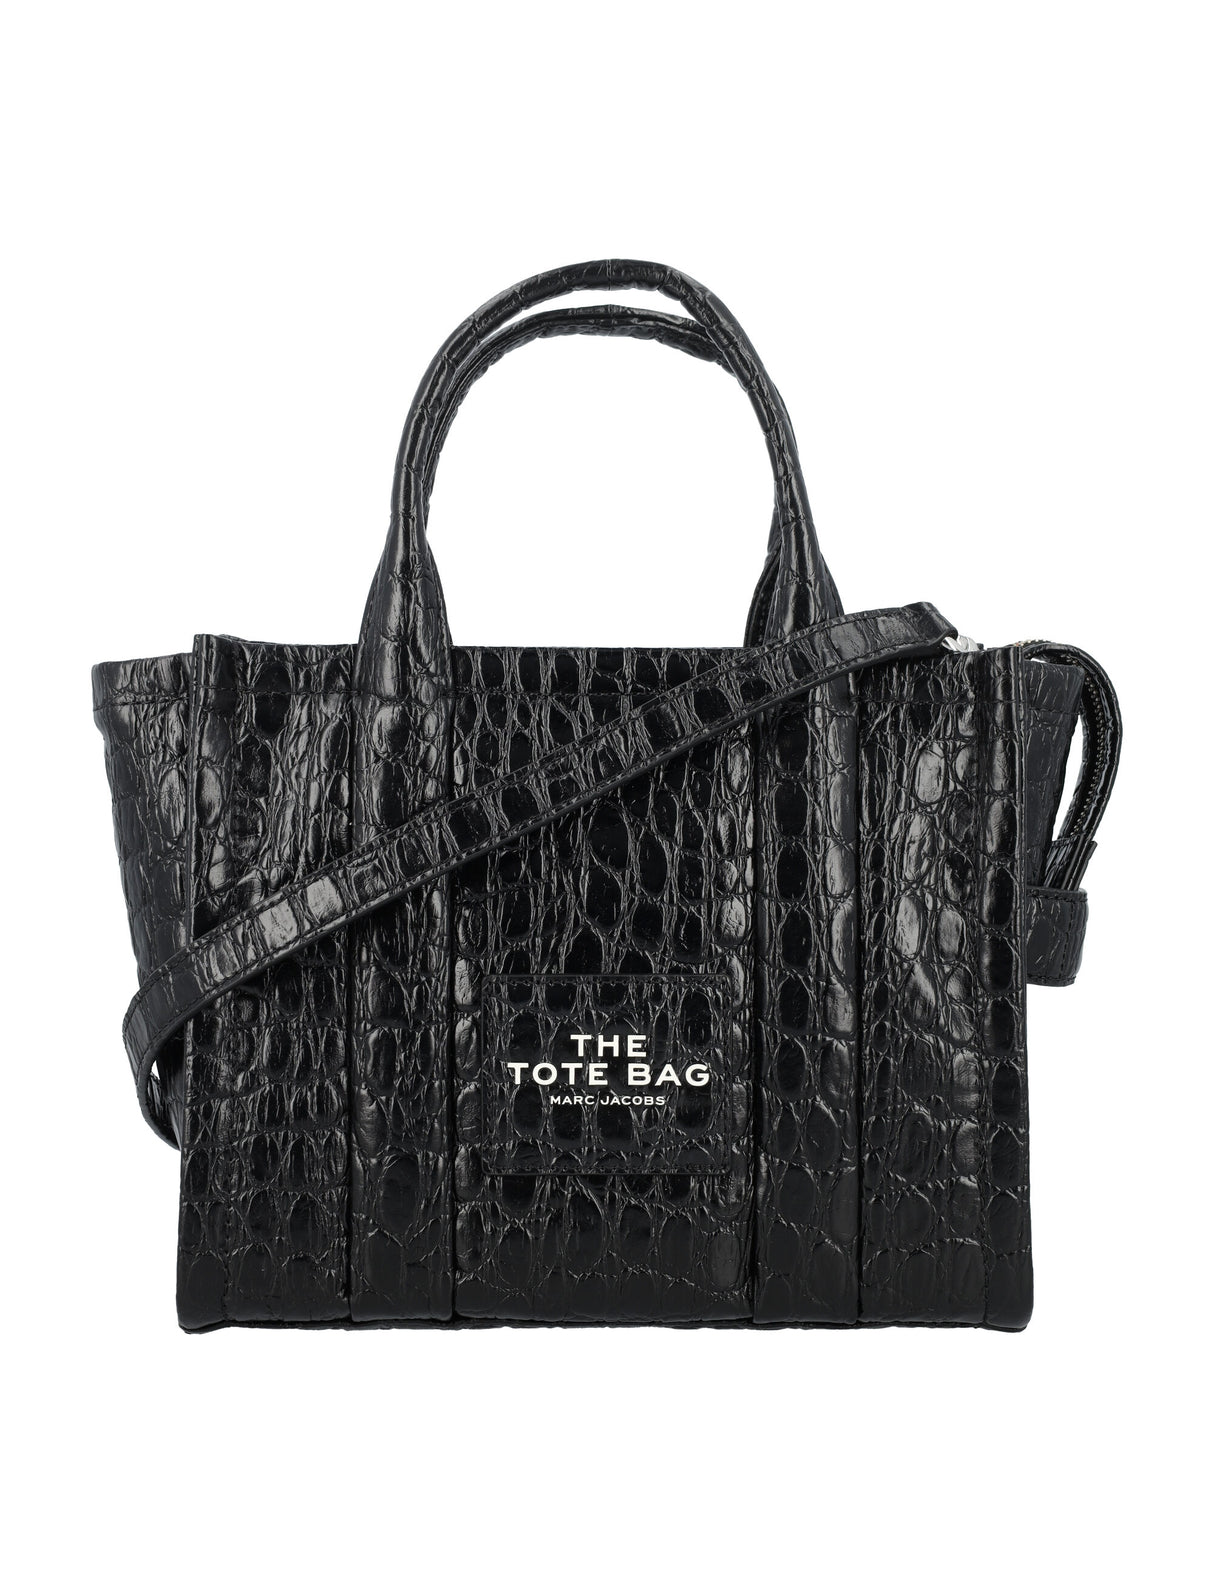 MARC JACOBS Black Croc-Embossed Mini Tote Handbag with Adjustable Strap